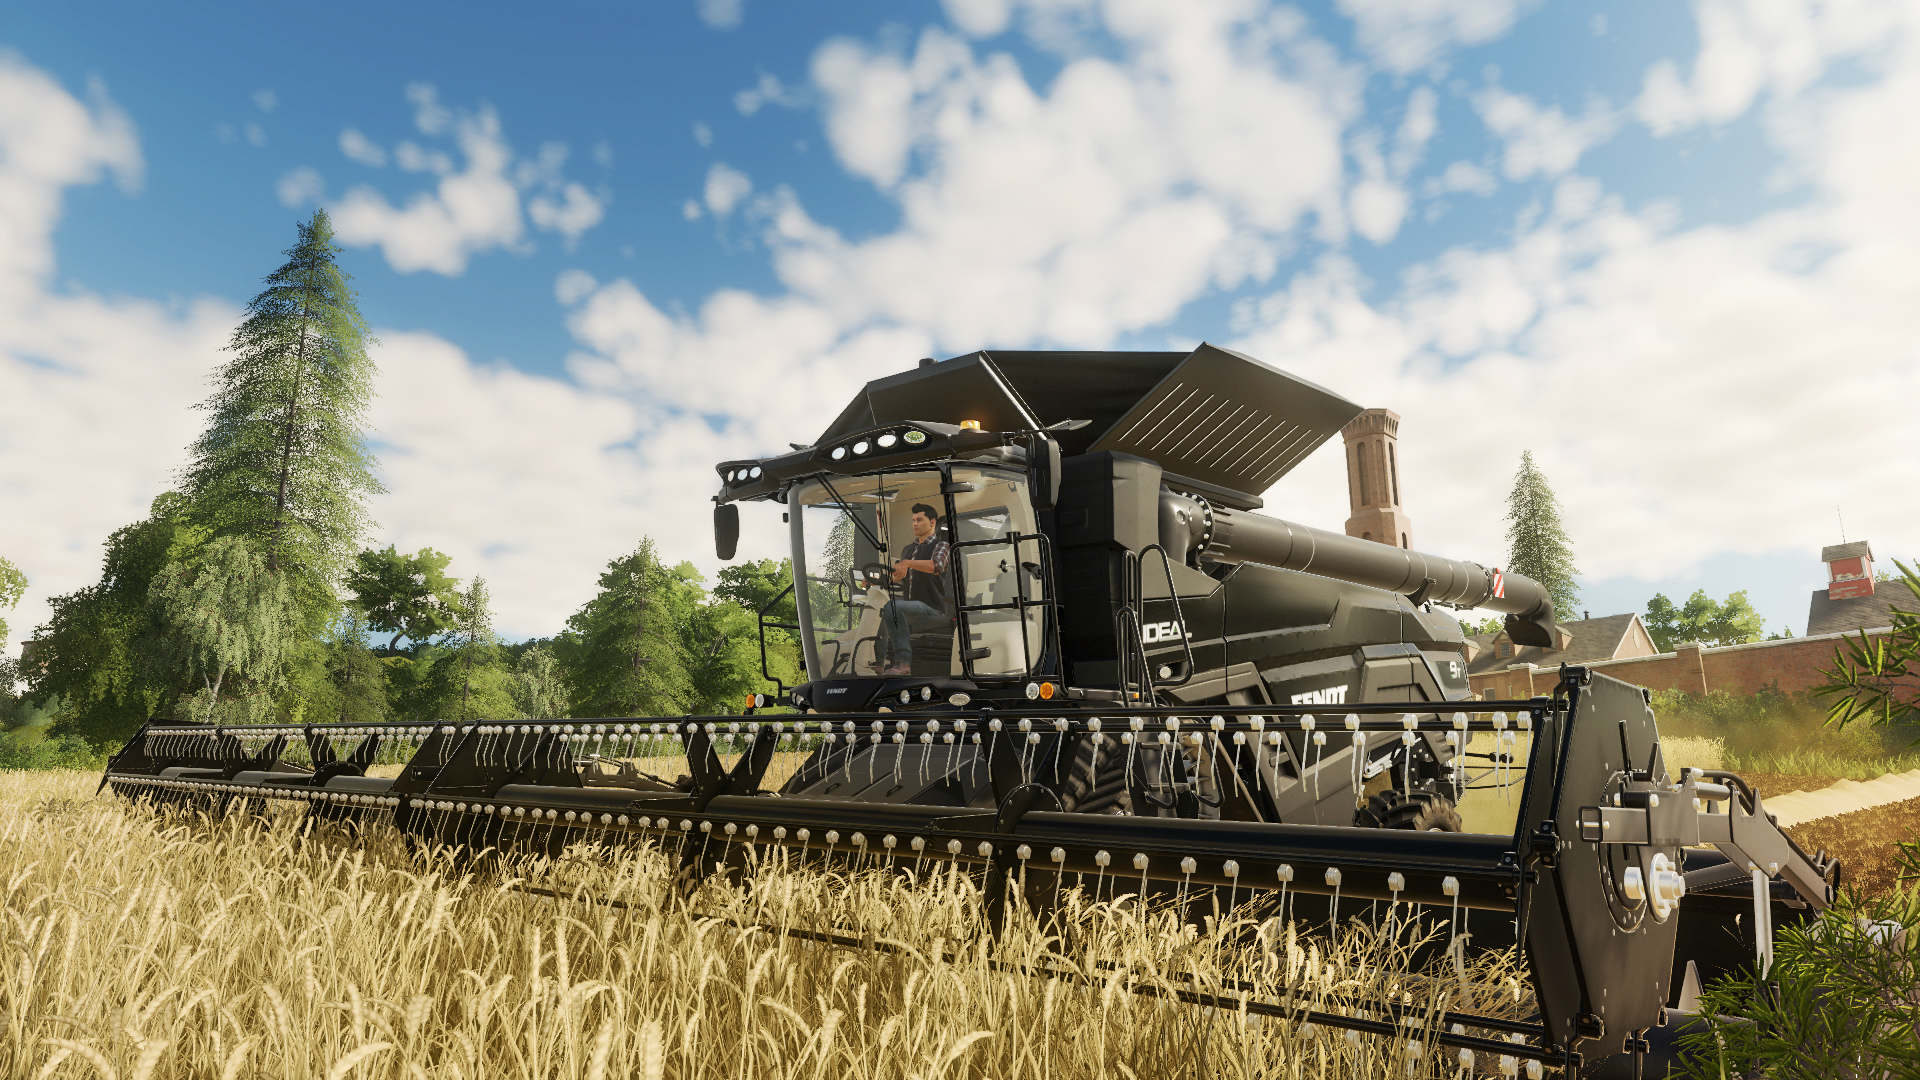 Best simulation games: Farming Simulator 19. Image shows a combine harvester harvesting.